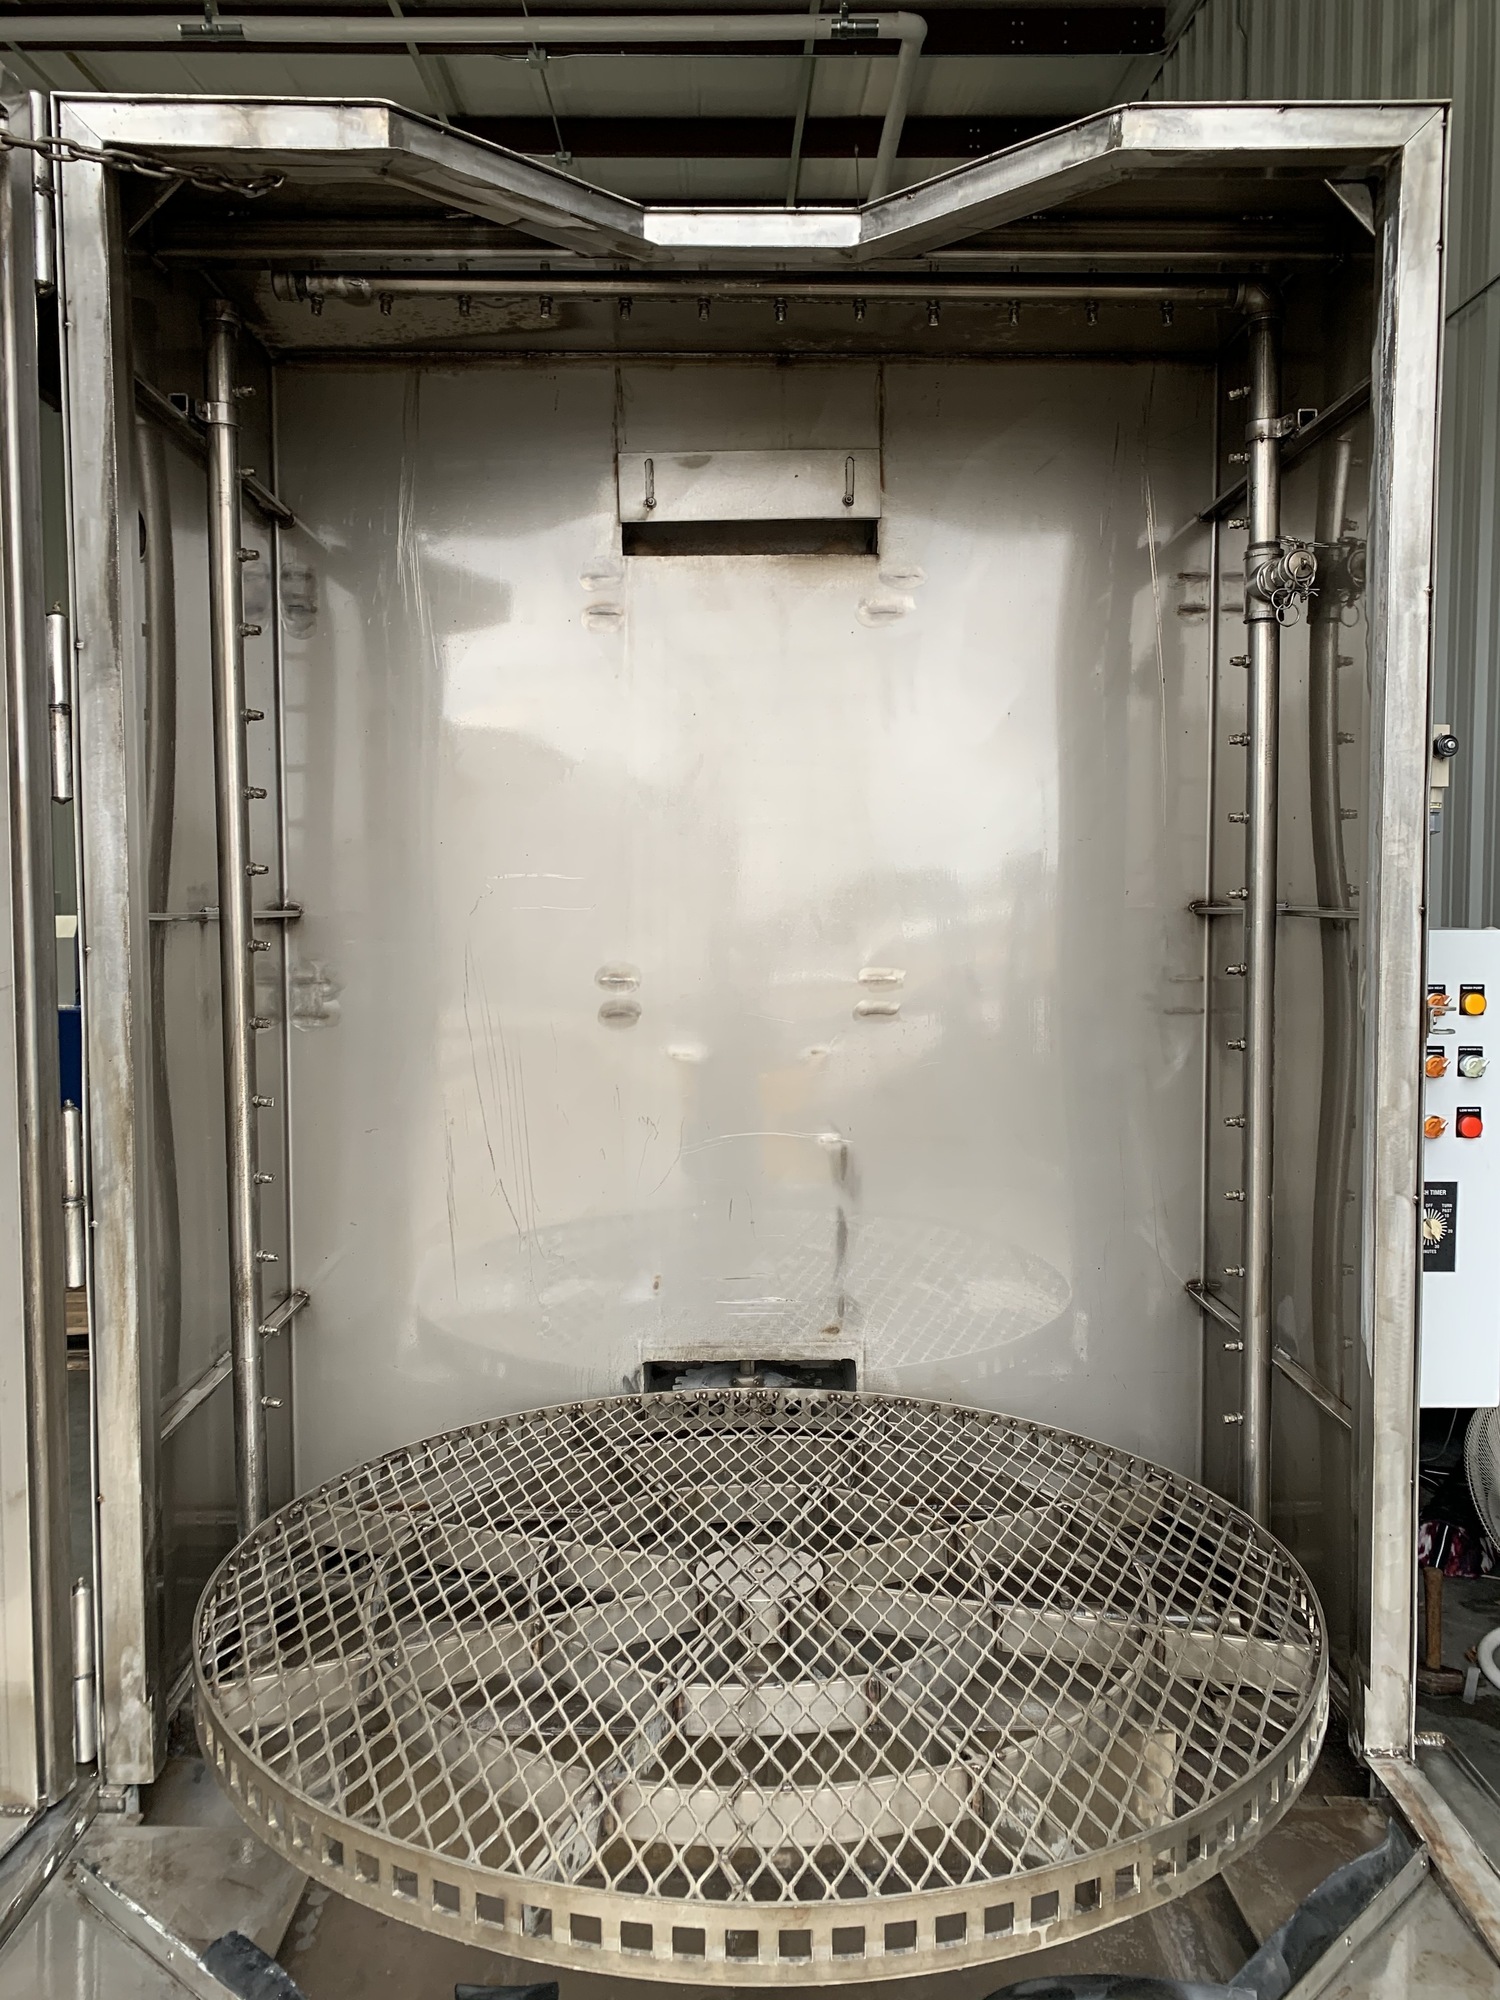 2016 JRI PCS5060SS2F Cabinet Washer | Benchmark Machine Tools